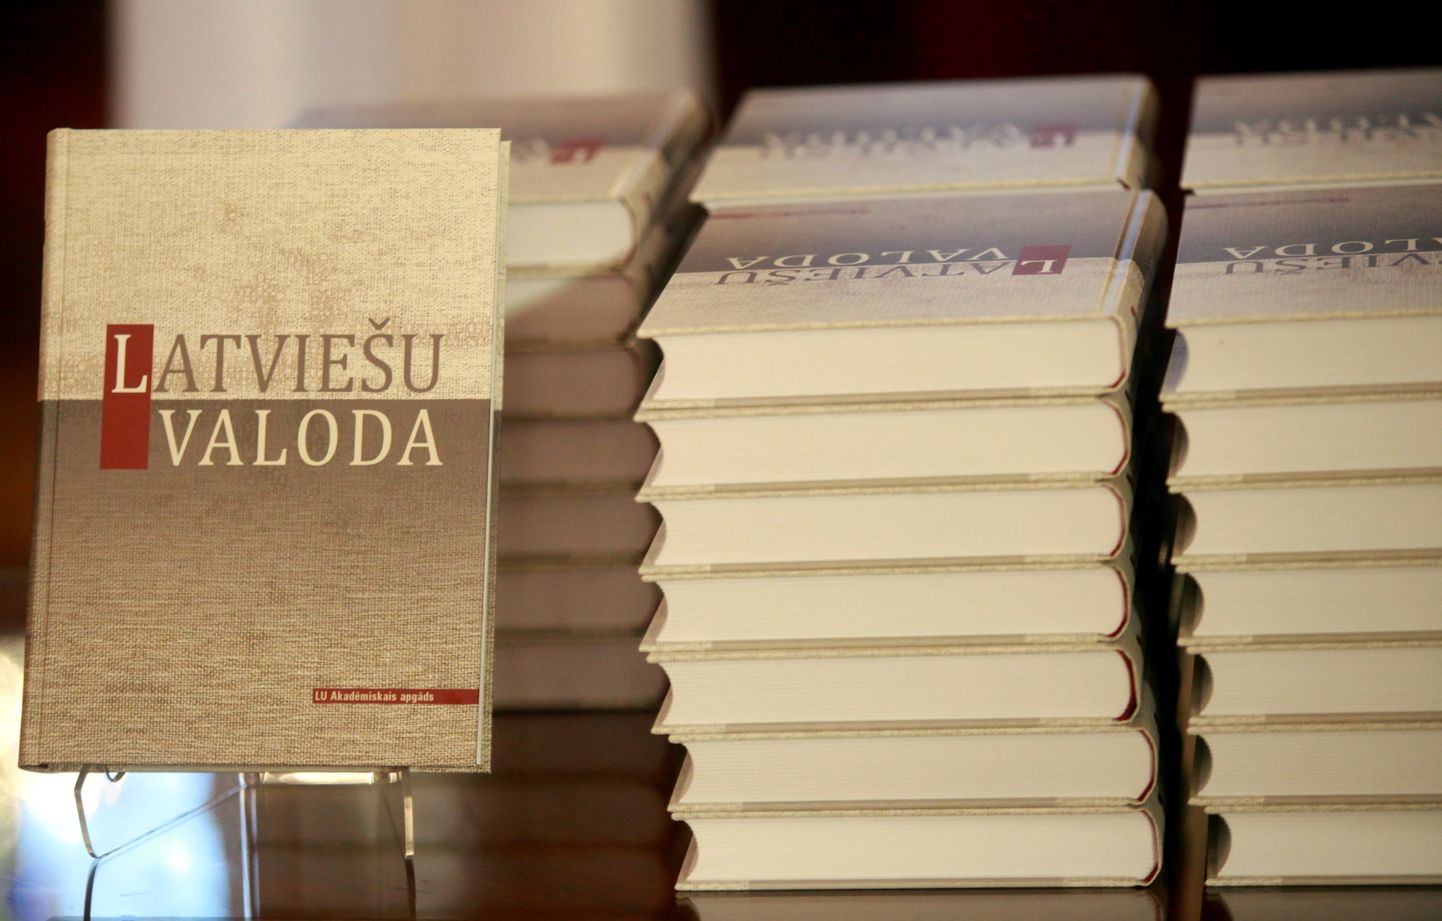 Книга "Латышский язык".